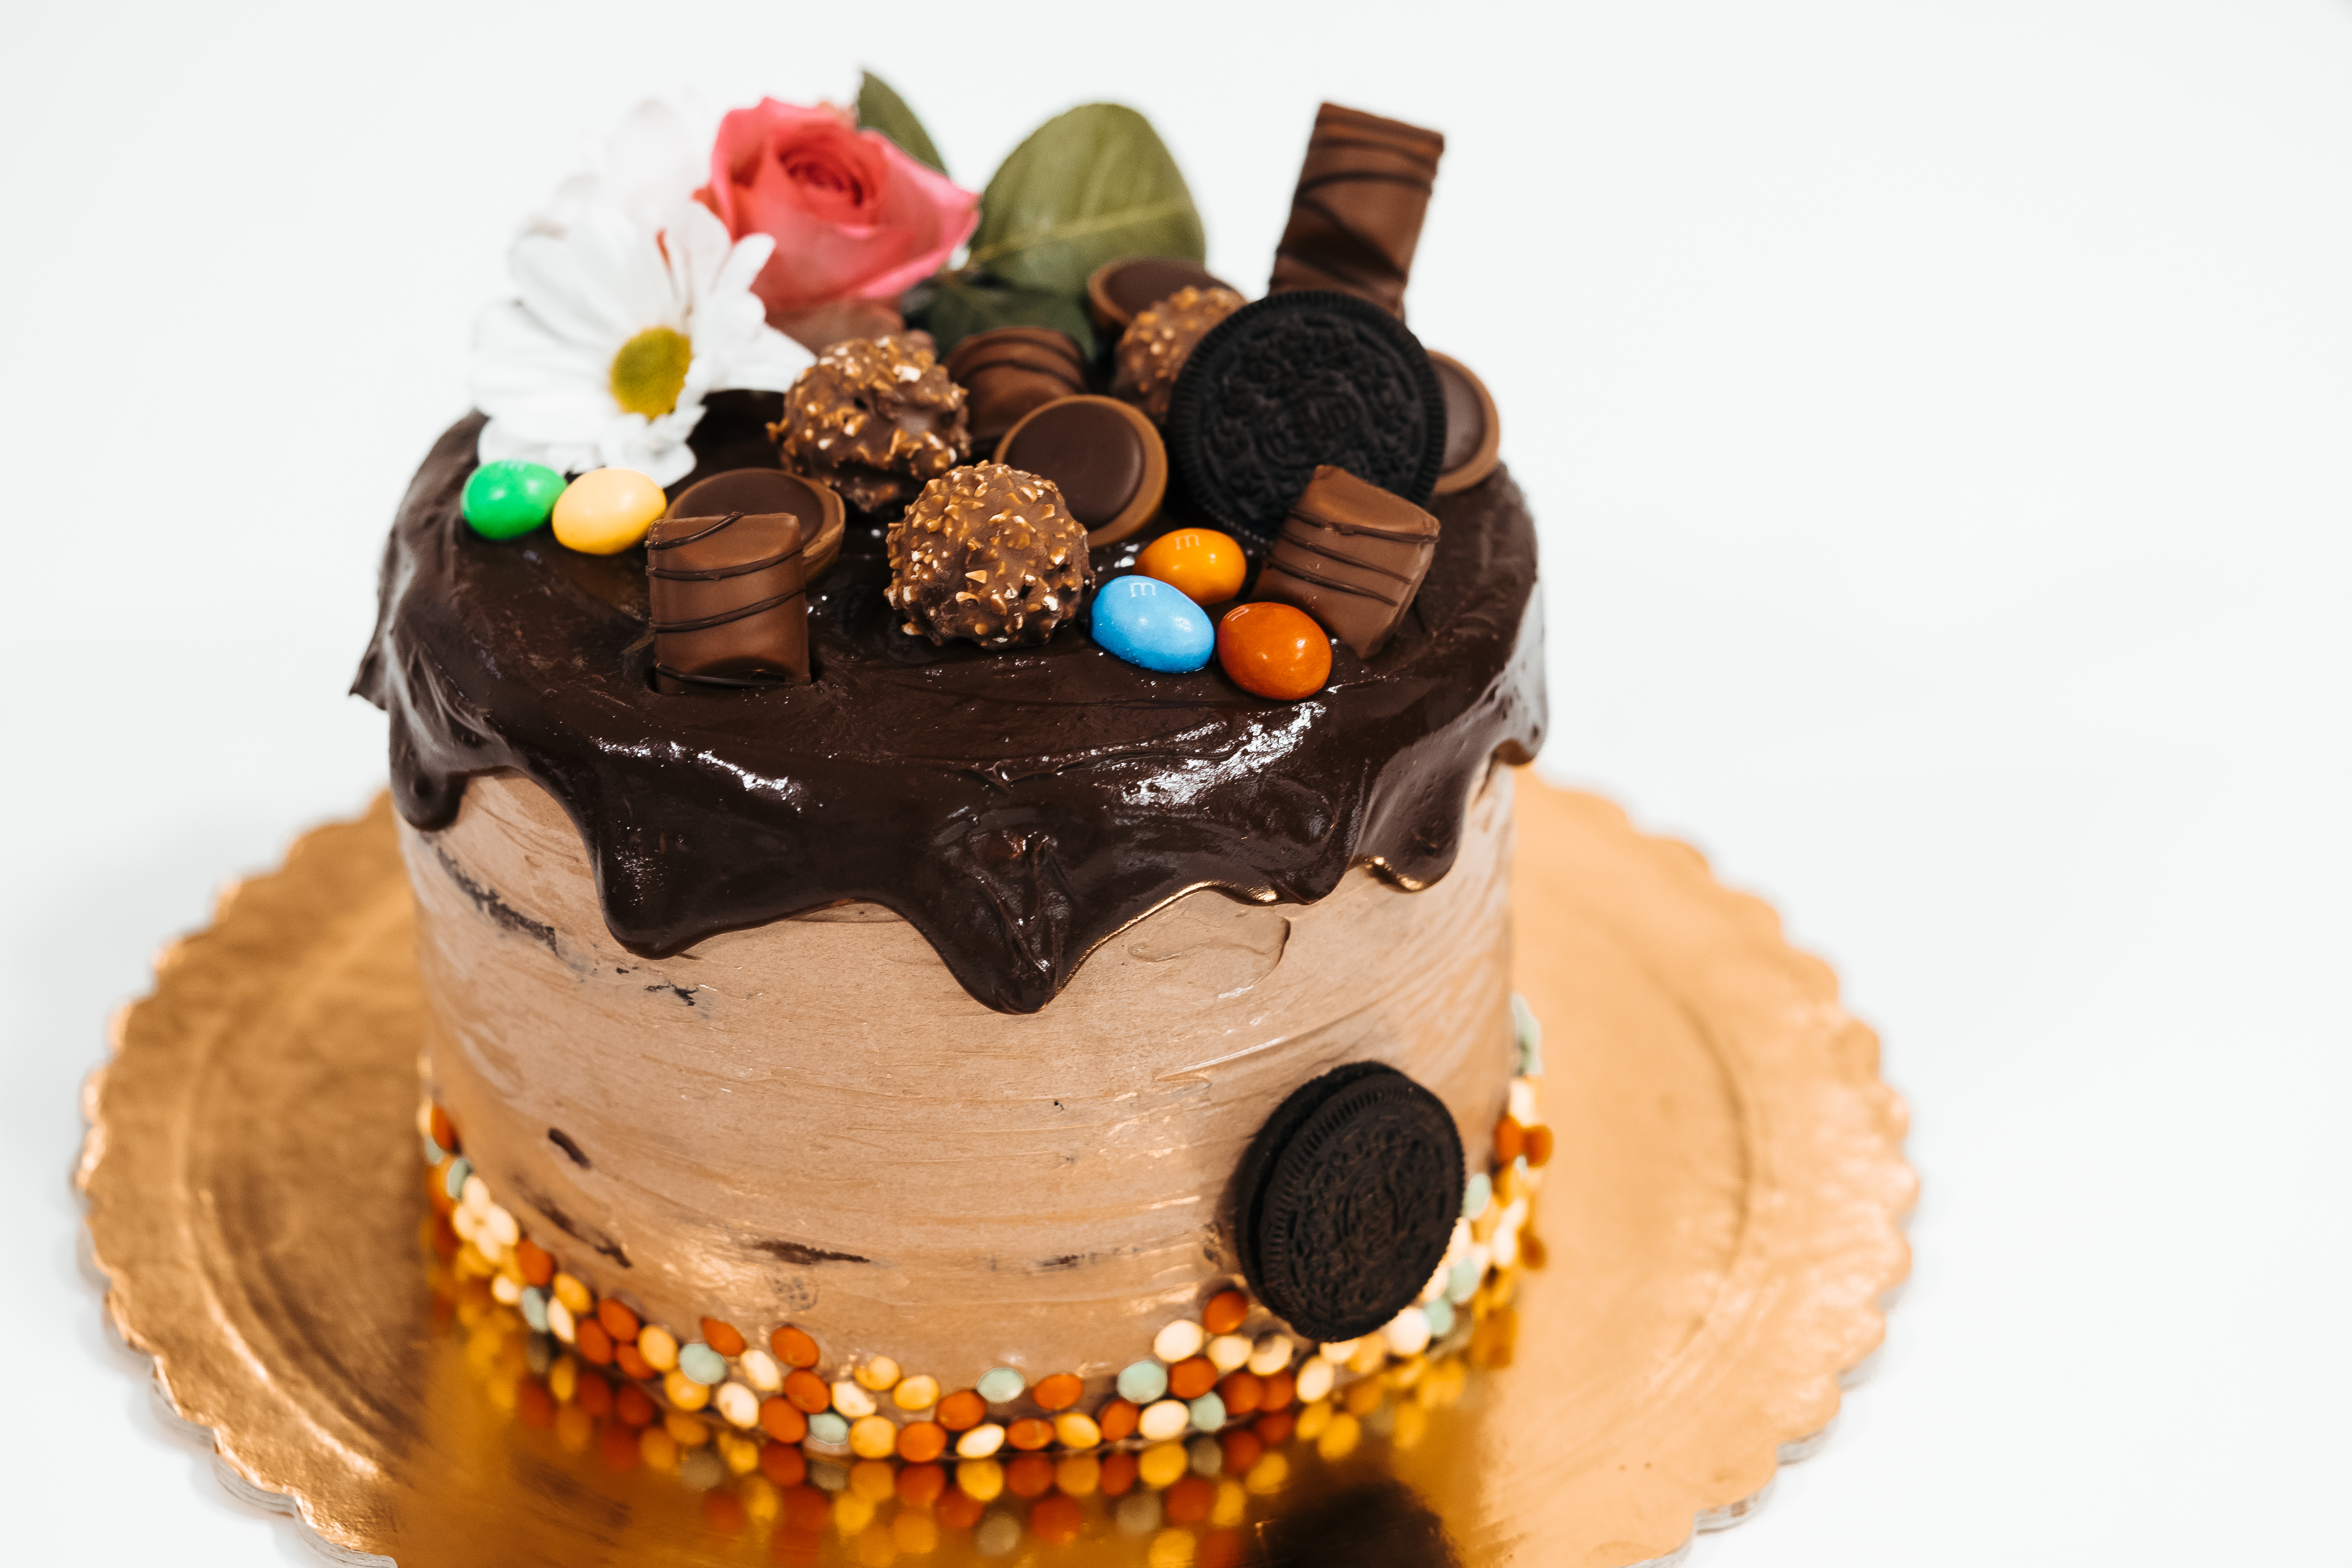 Birthday Cake with Chocolate Decorations Free Stock Photo | picjumbo